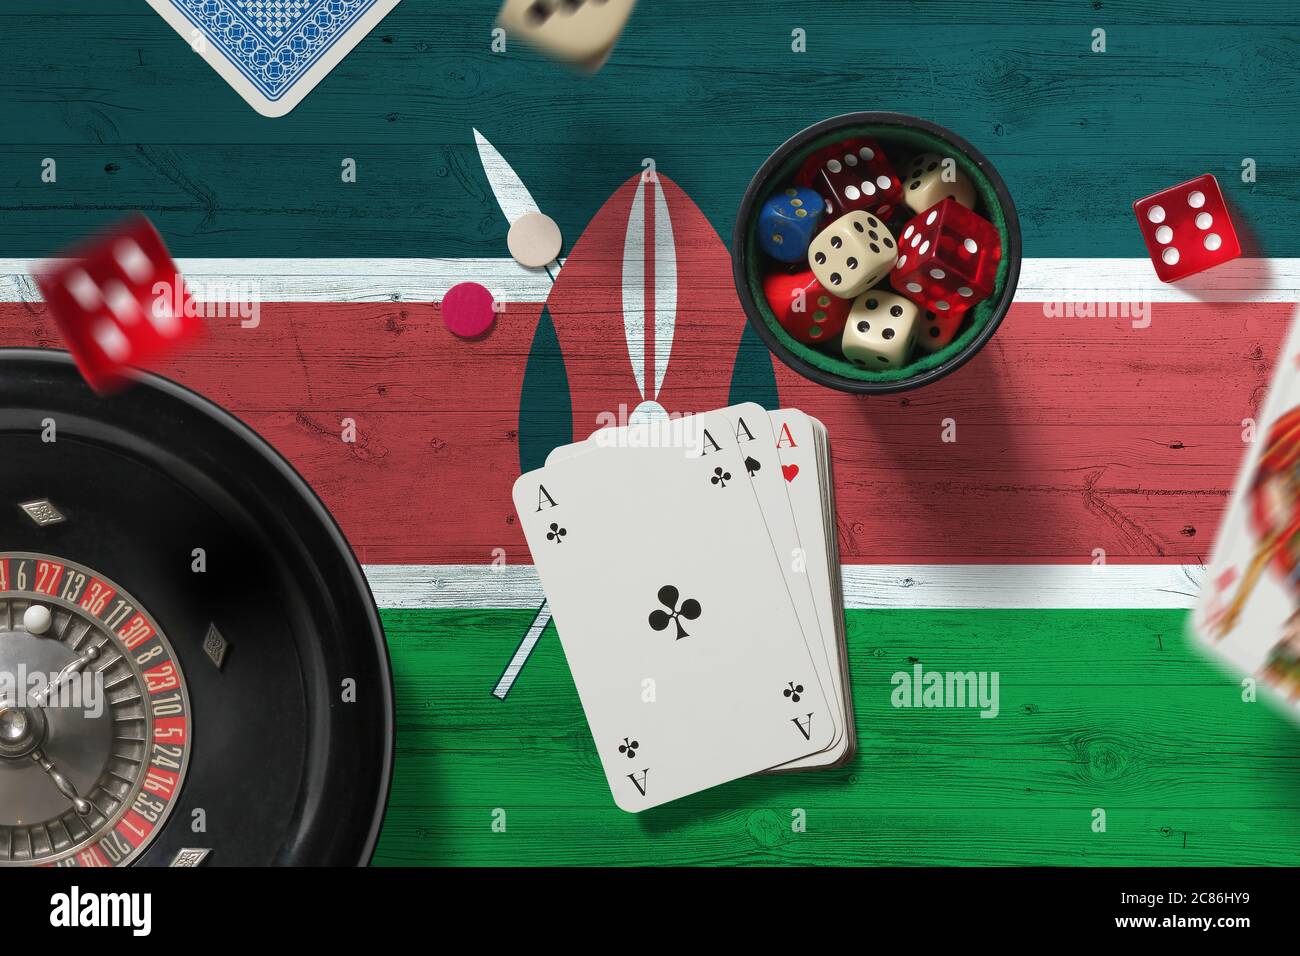 best online casino in kenya and Digital Transformation